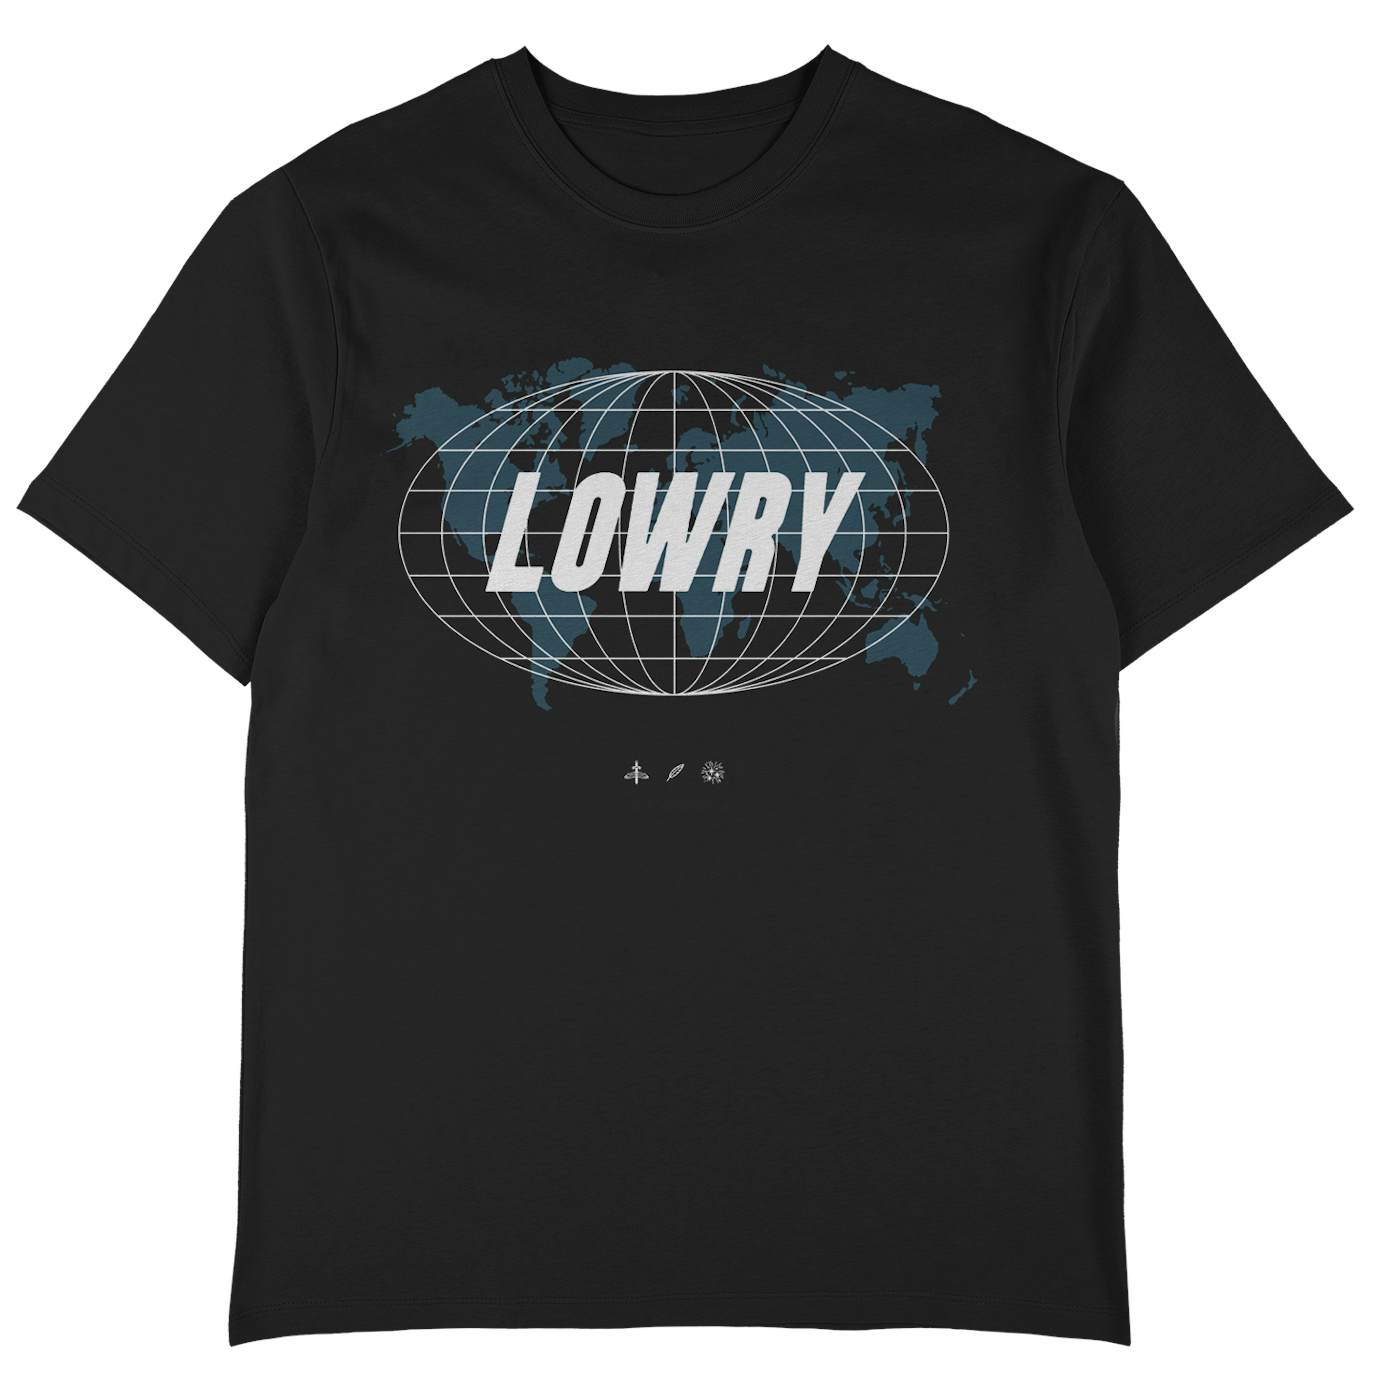 Witt Lowry Lowry Worldwide T-shirt